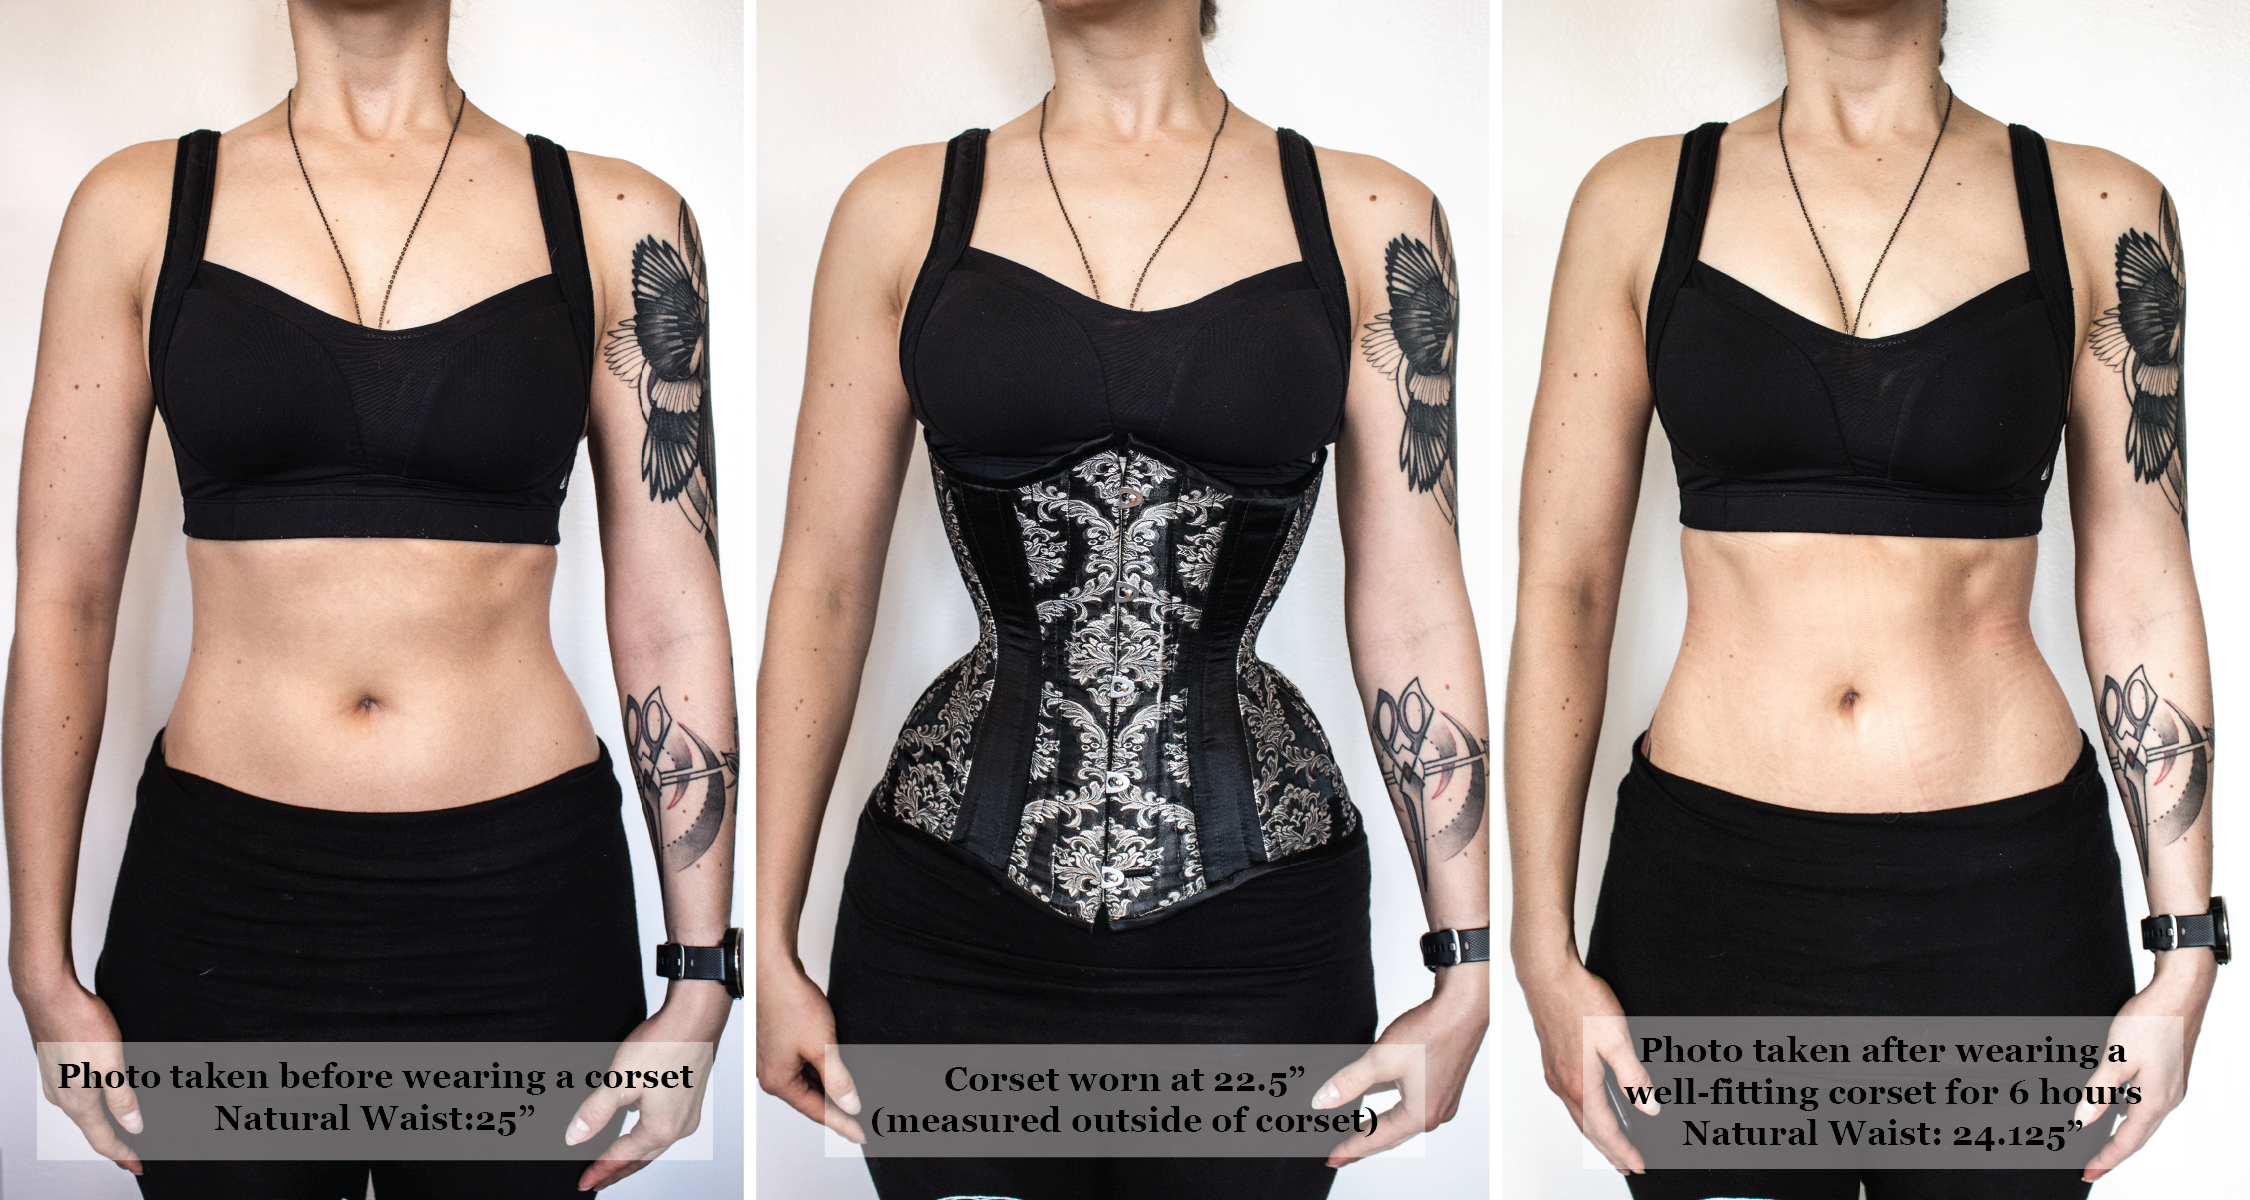 Can corsets actually make you smaller over time? - Quora